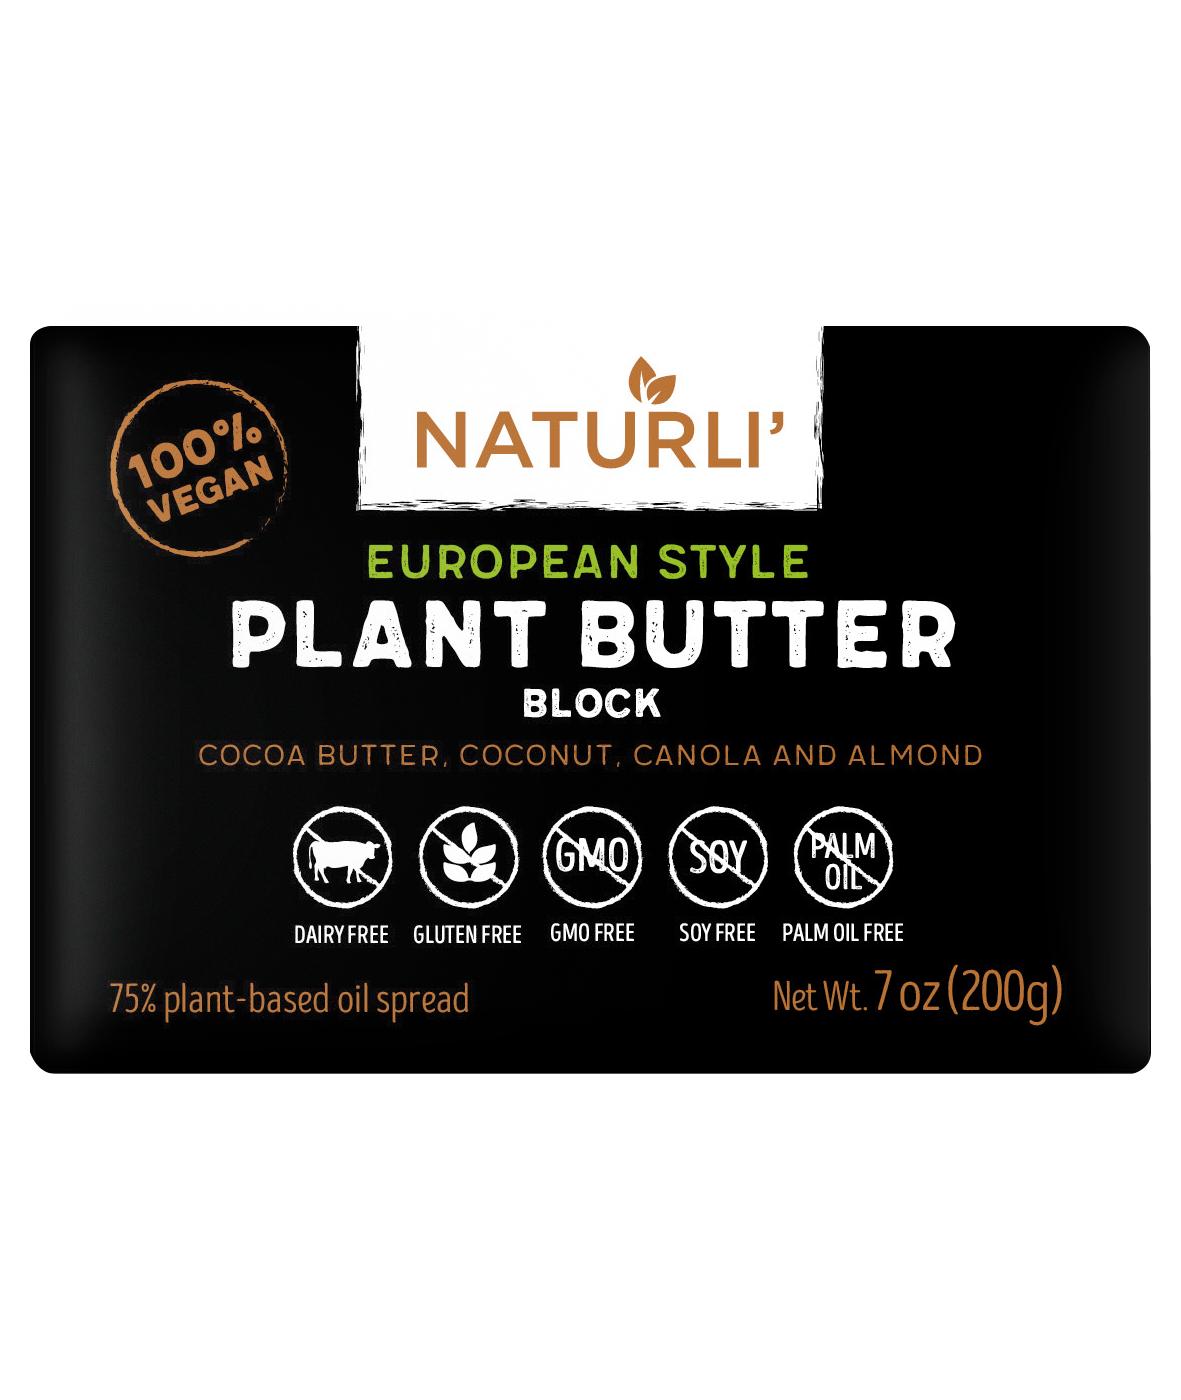 Naturli European Style Plant Butter Block; image 1 of 2